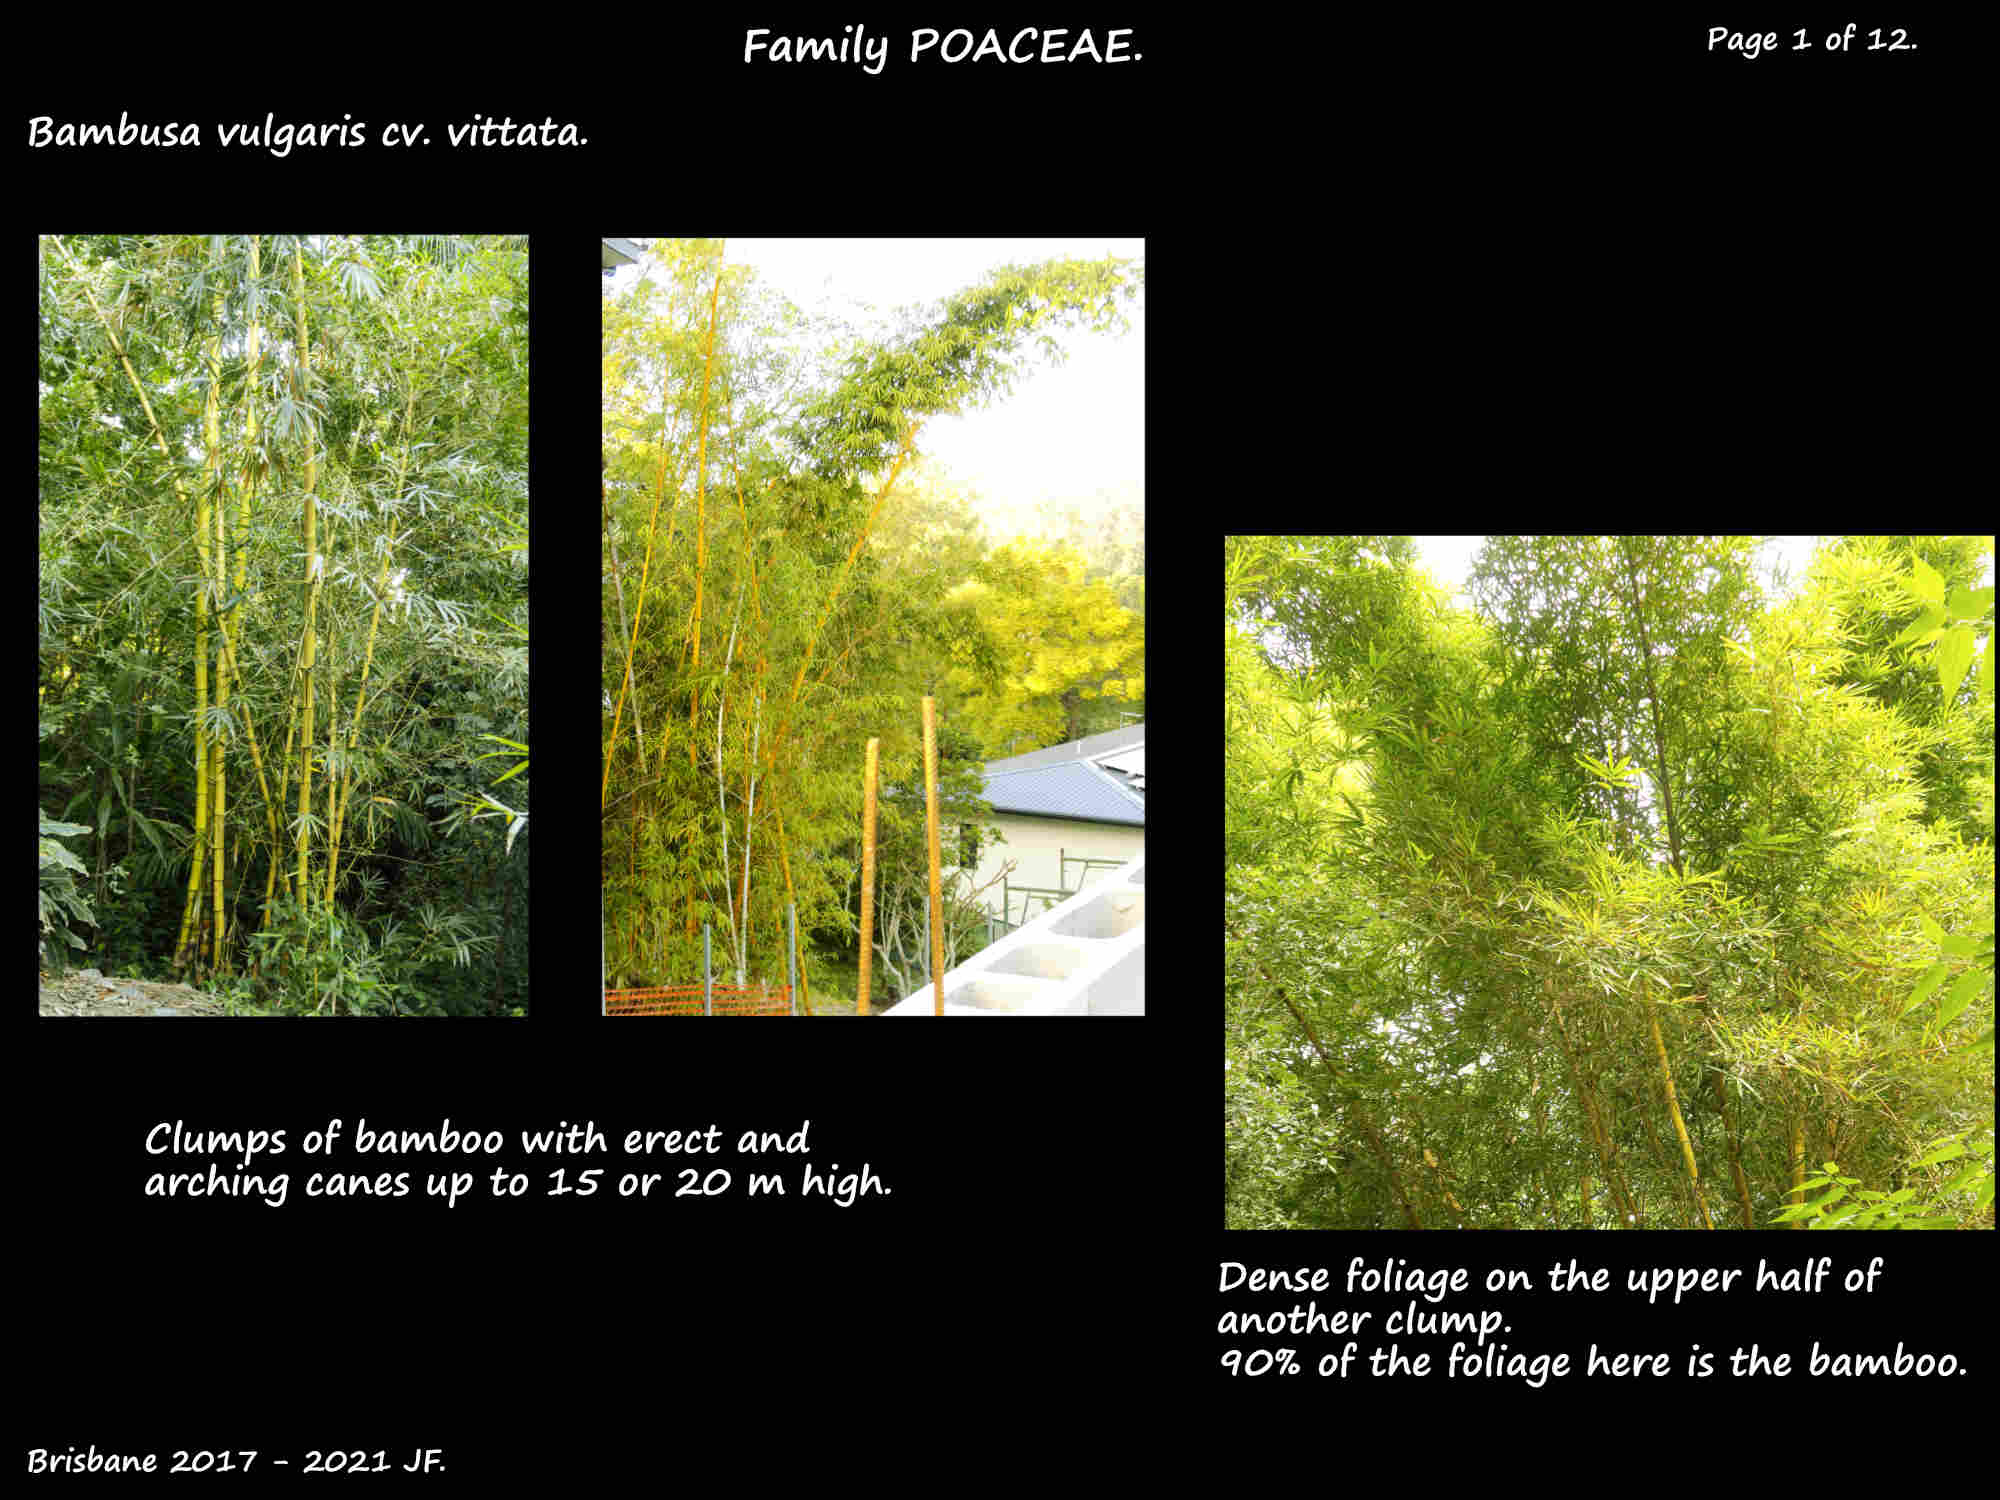 1 Clumps of Bambusa vulgaris cv. vittata